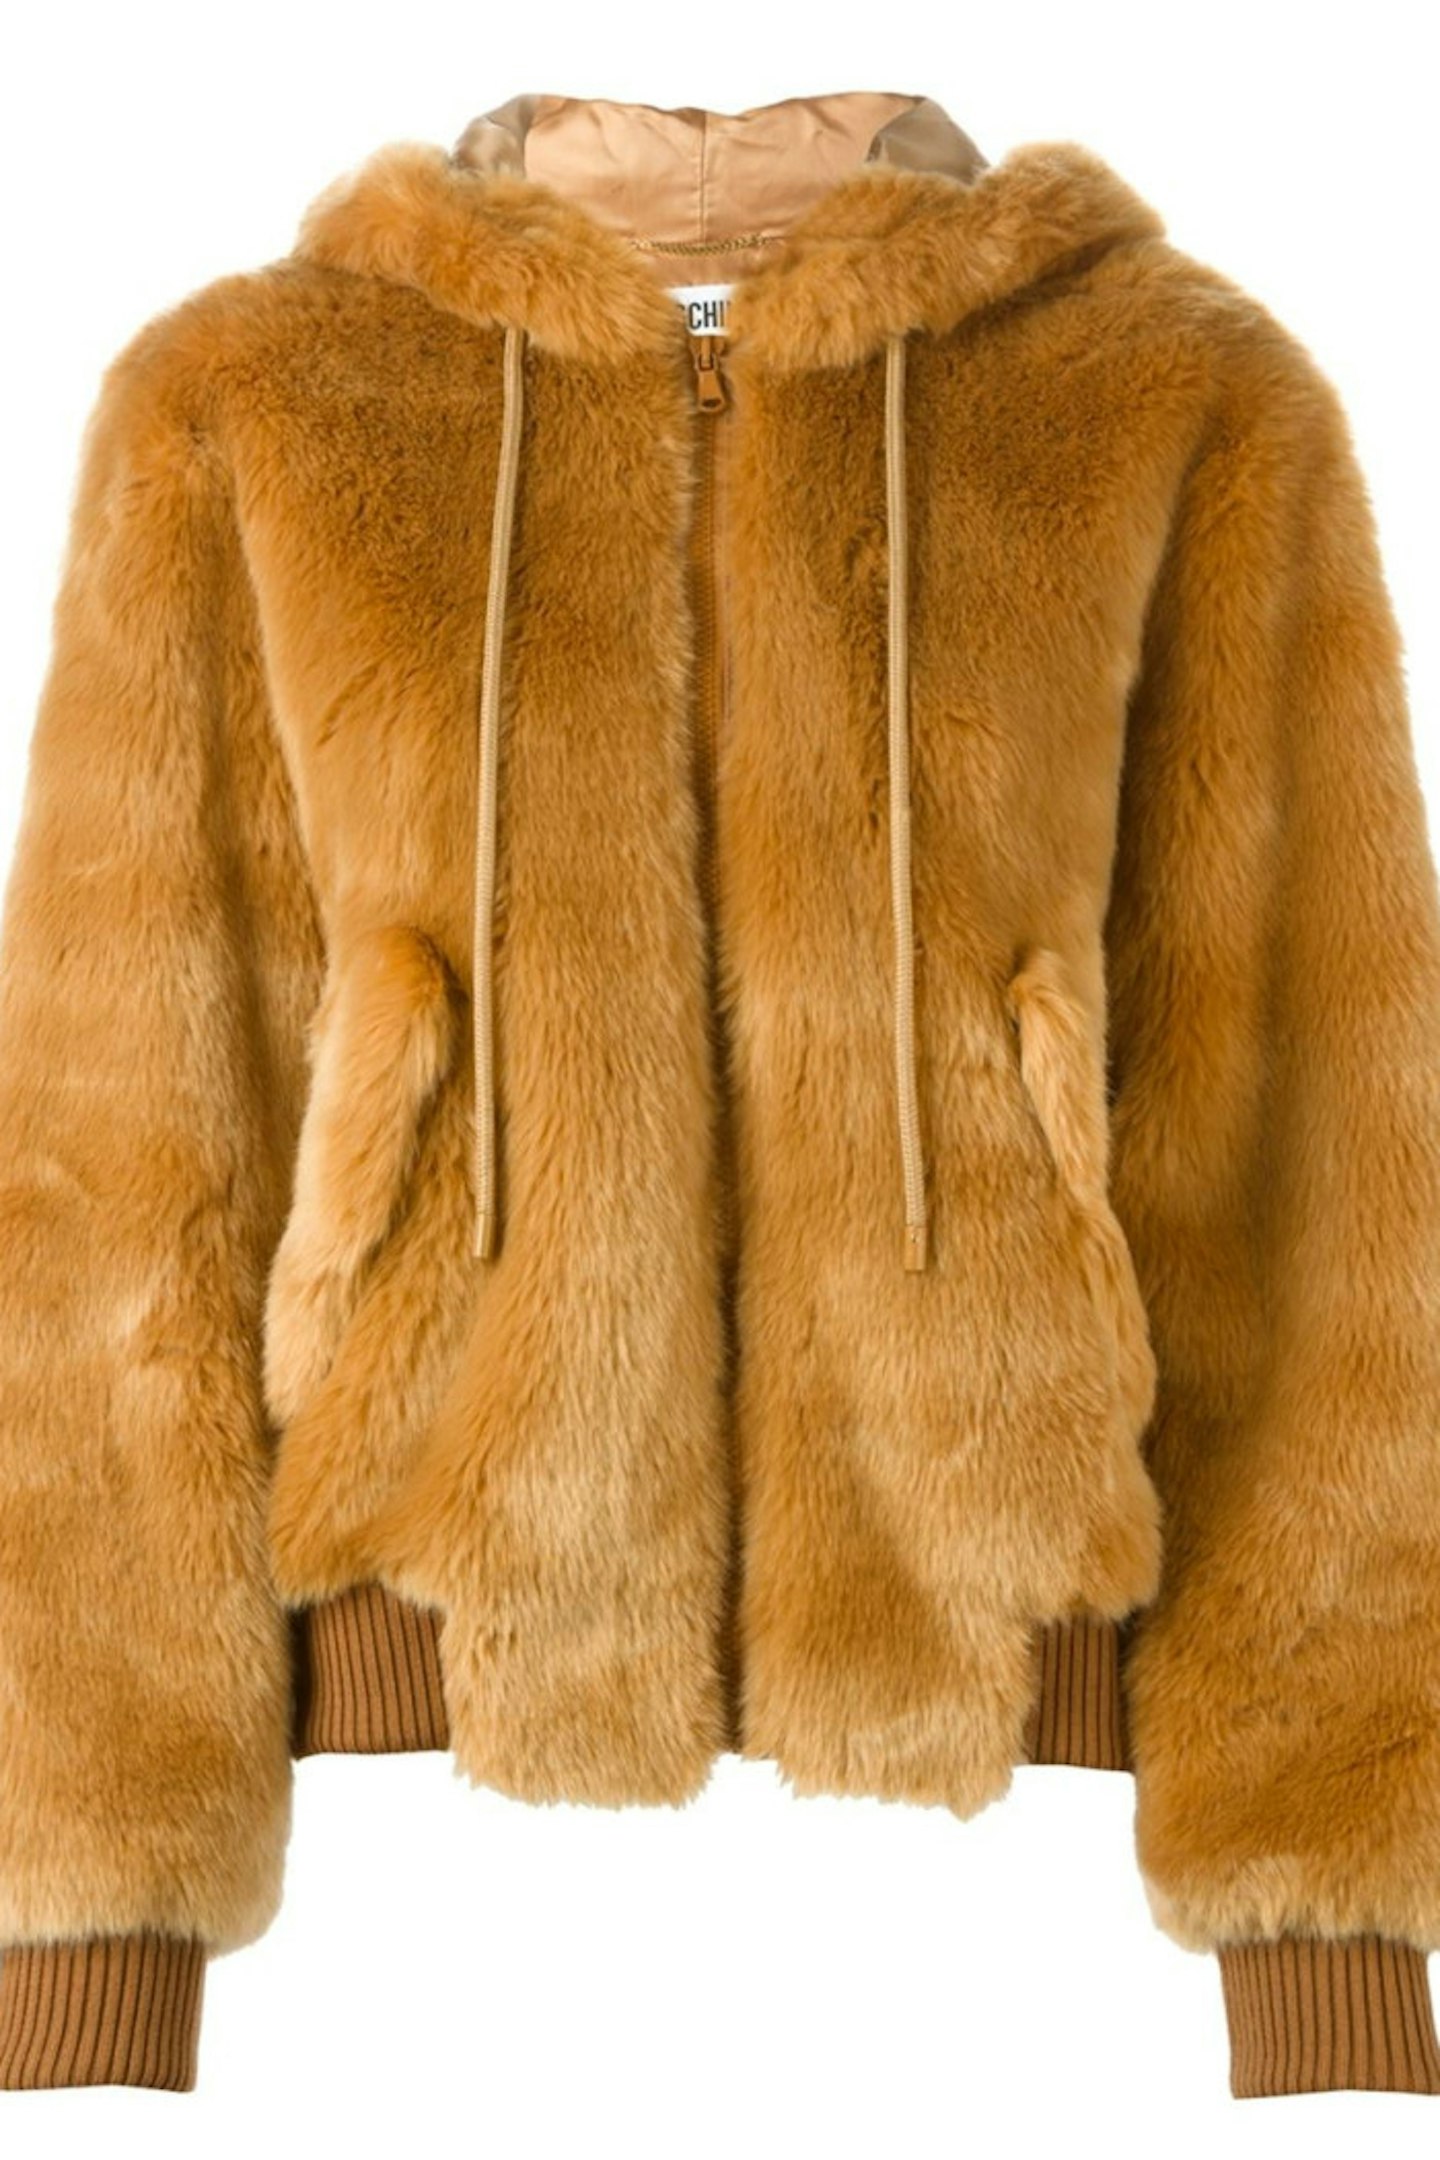 MOSCHINO faux fur jacket